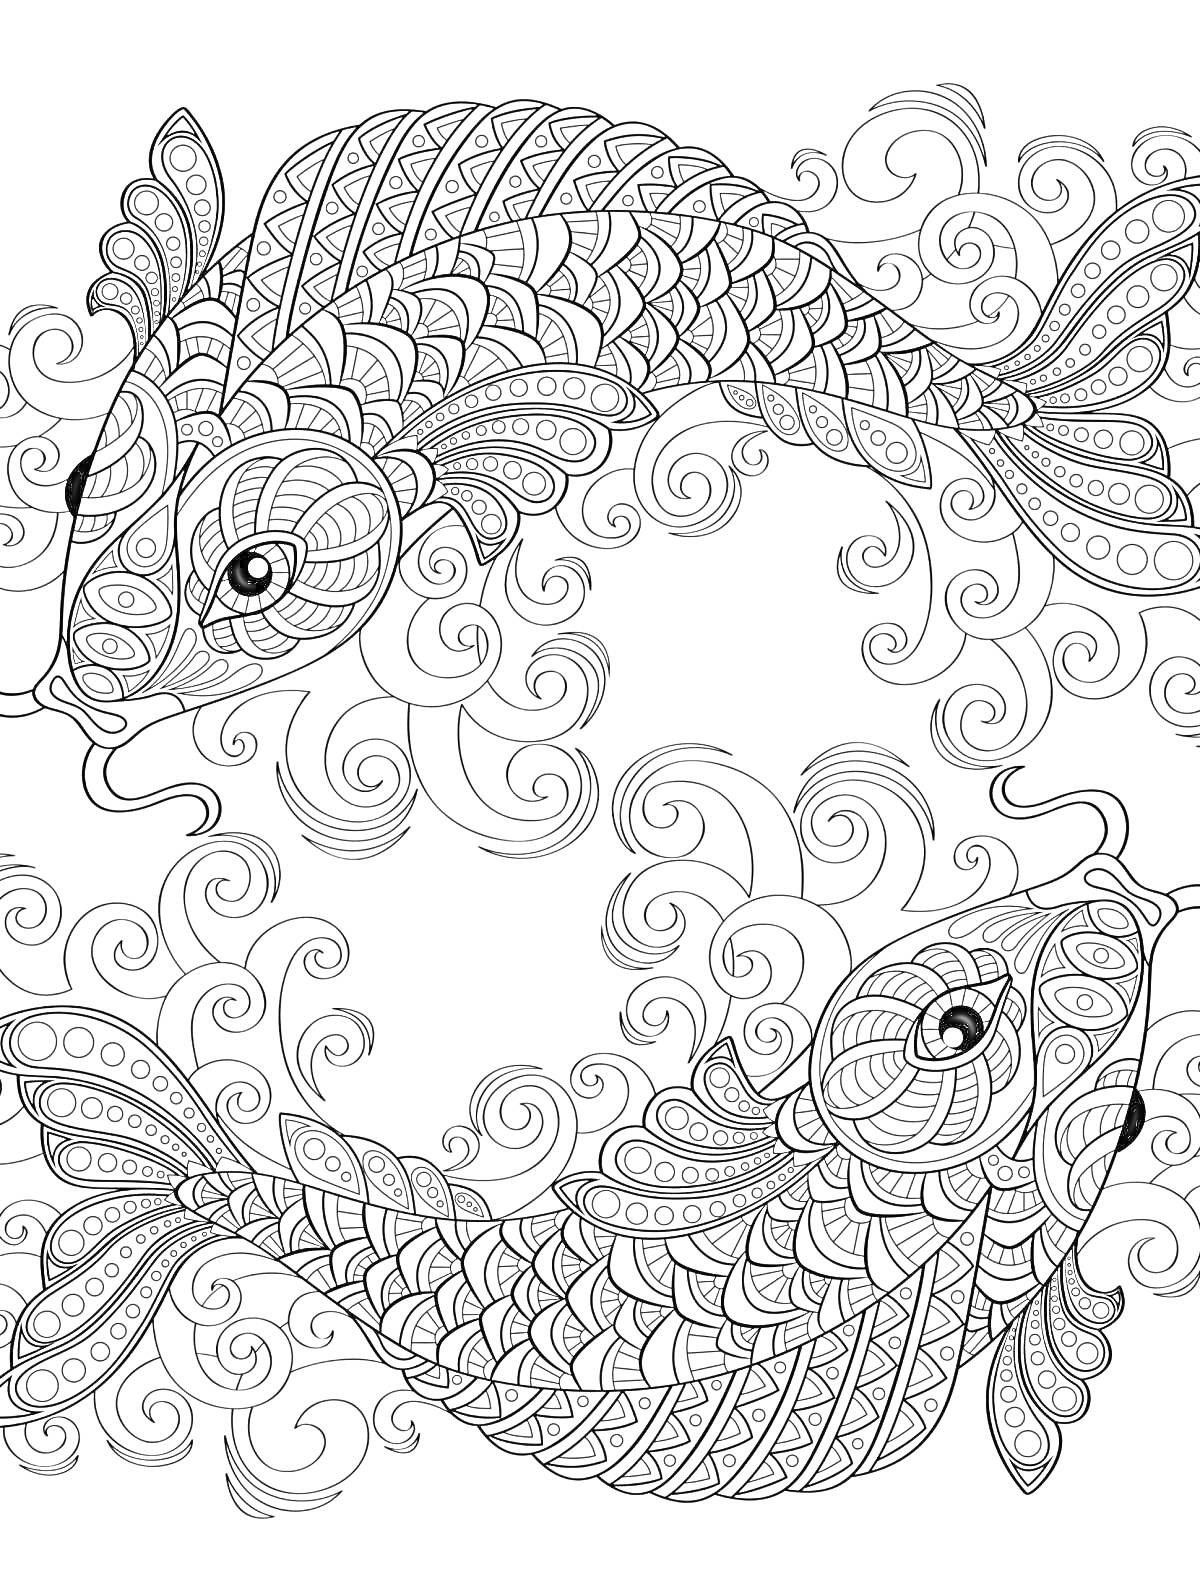 Раскраска Две рыбы с узорами на фоне завитков